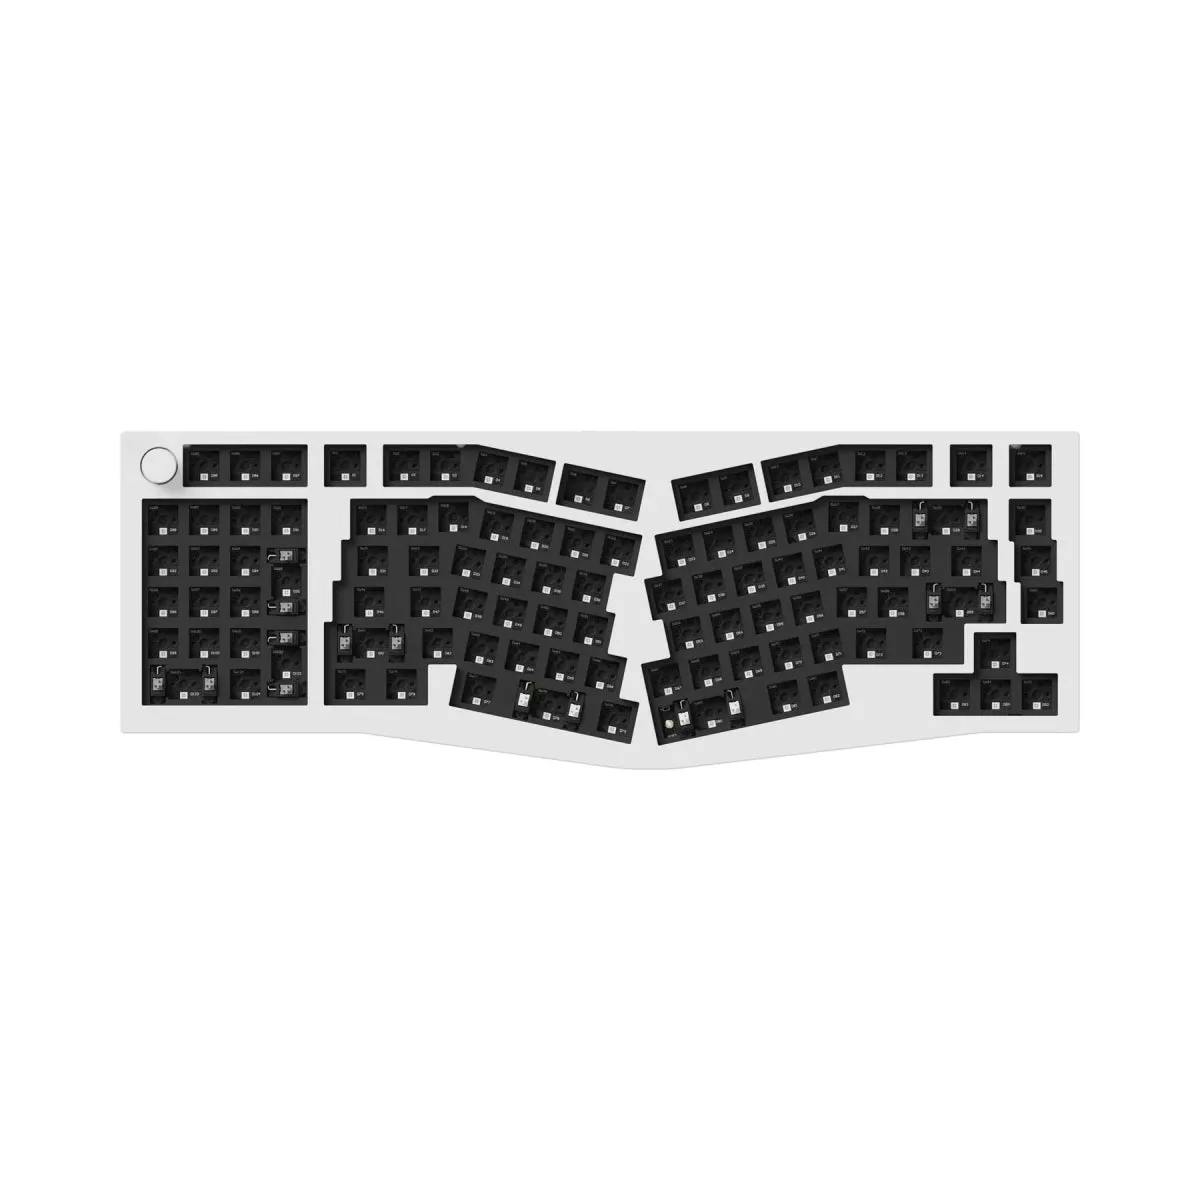 Image for Keychron Q14 Pro 96% Southpaw Alice Keyboard